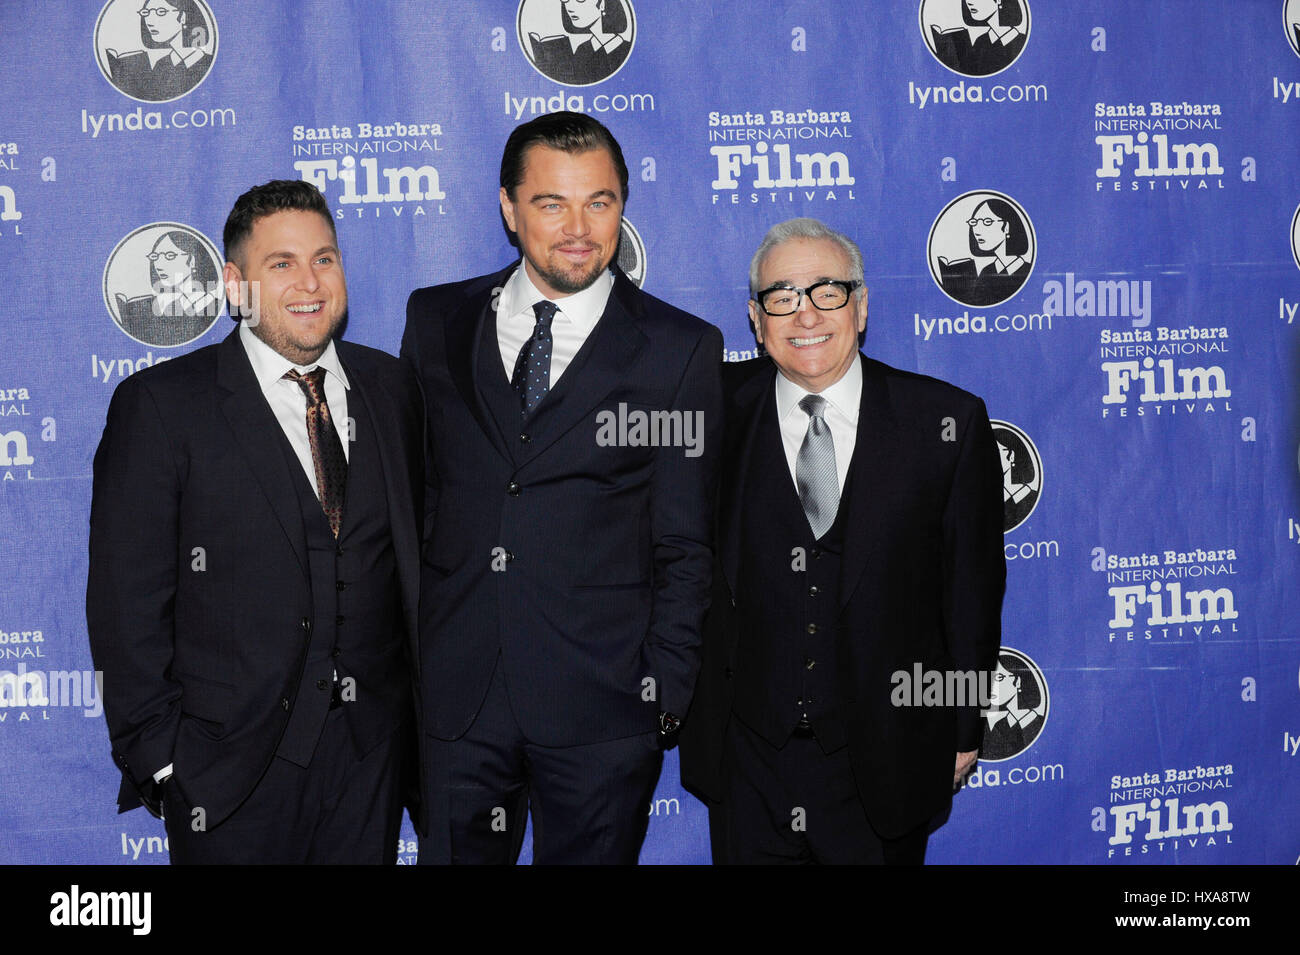 (L-R) Jonah Hill, Leonardo DiCaprio and Martin Scorsese attend the 29th Santa Barbara International Film Festival Cinema Vanguard Award at the Arlington Theatre on February 6, 2014 in Santa Barbara, California. Stock Photo